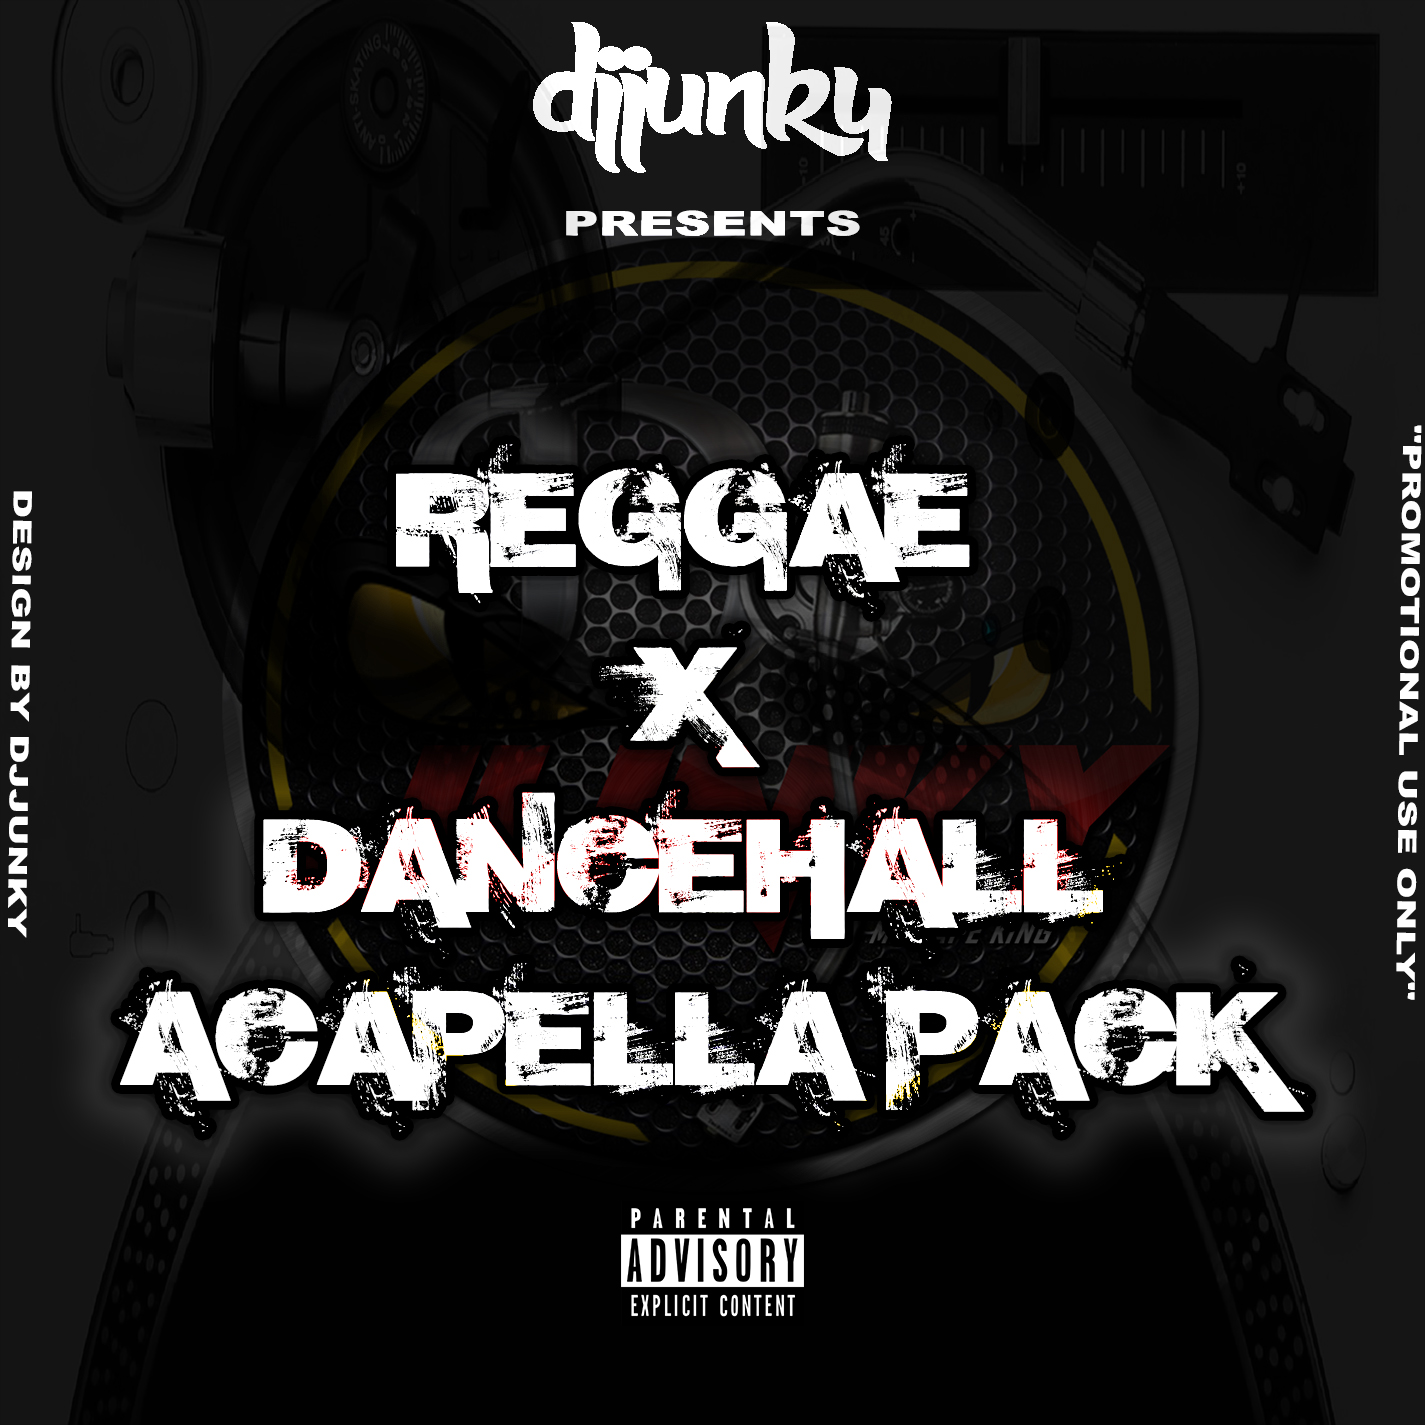 dancehall acapella pack